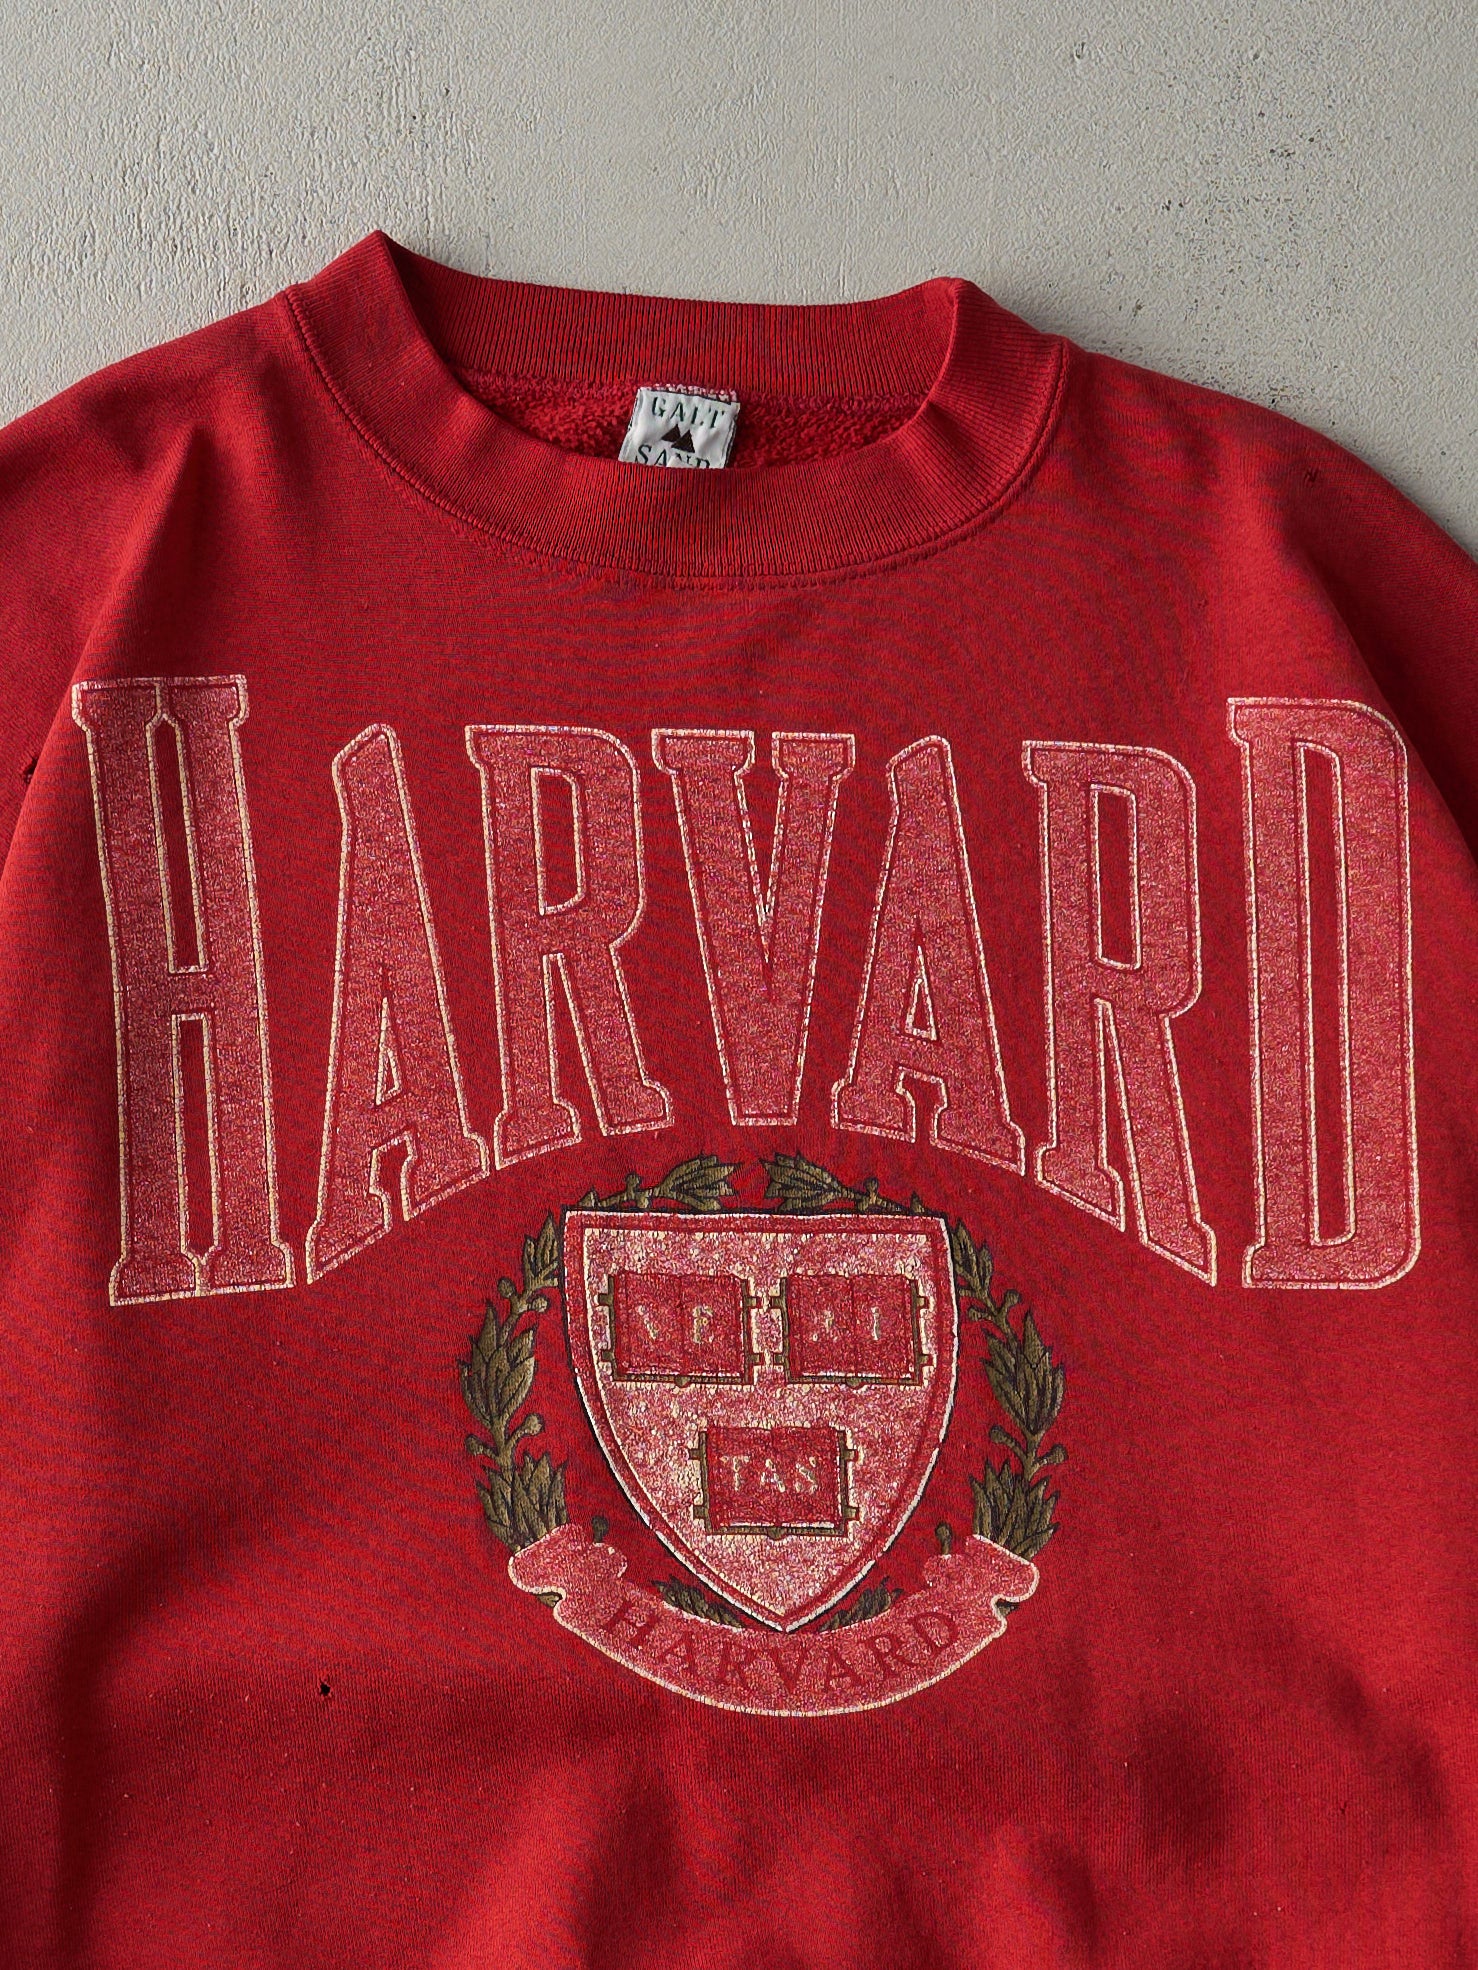 Vintage 90s Faded Red Harvard University Emblem Crewneck (L)